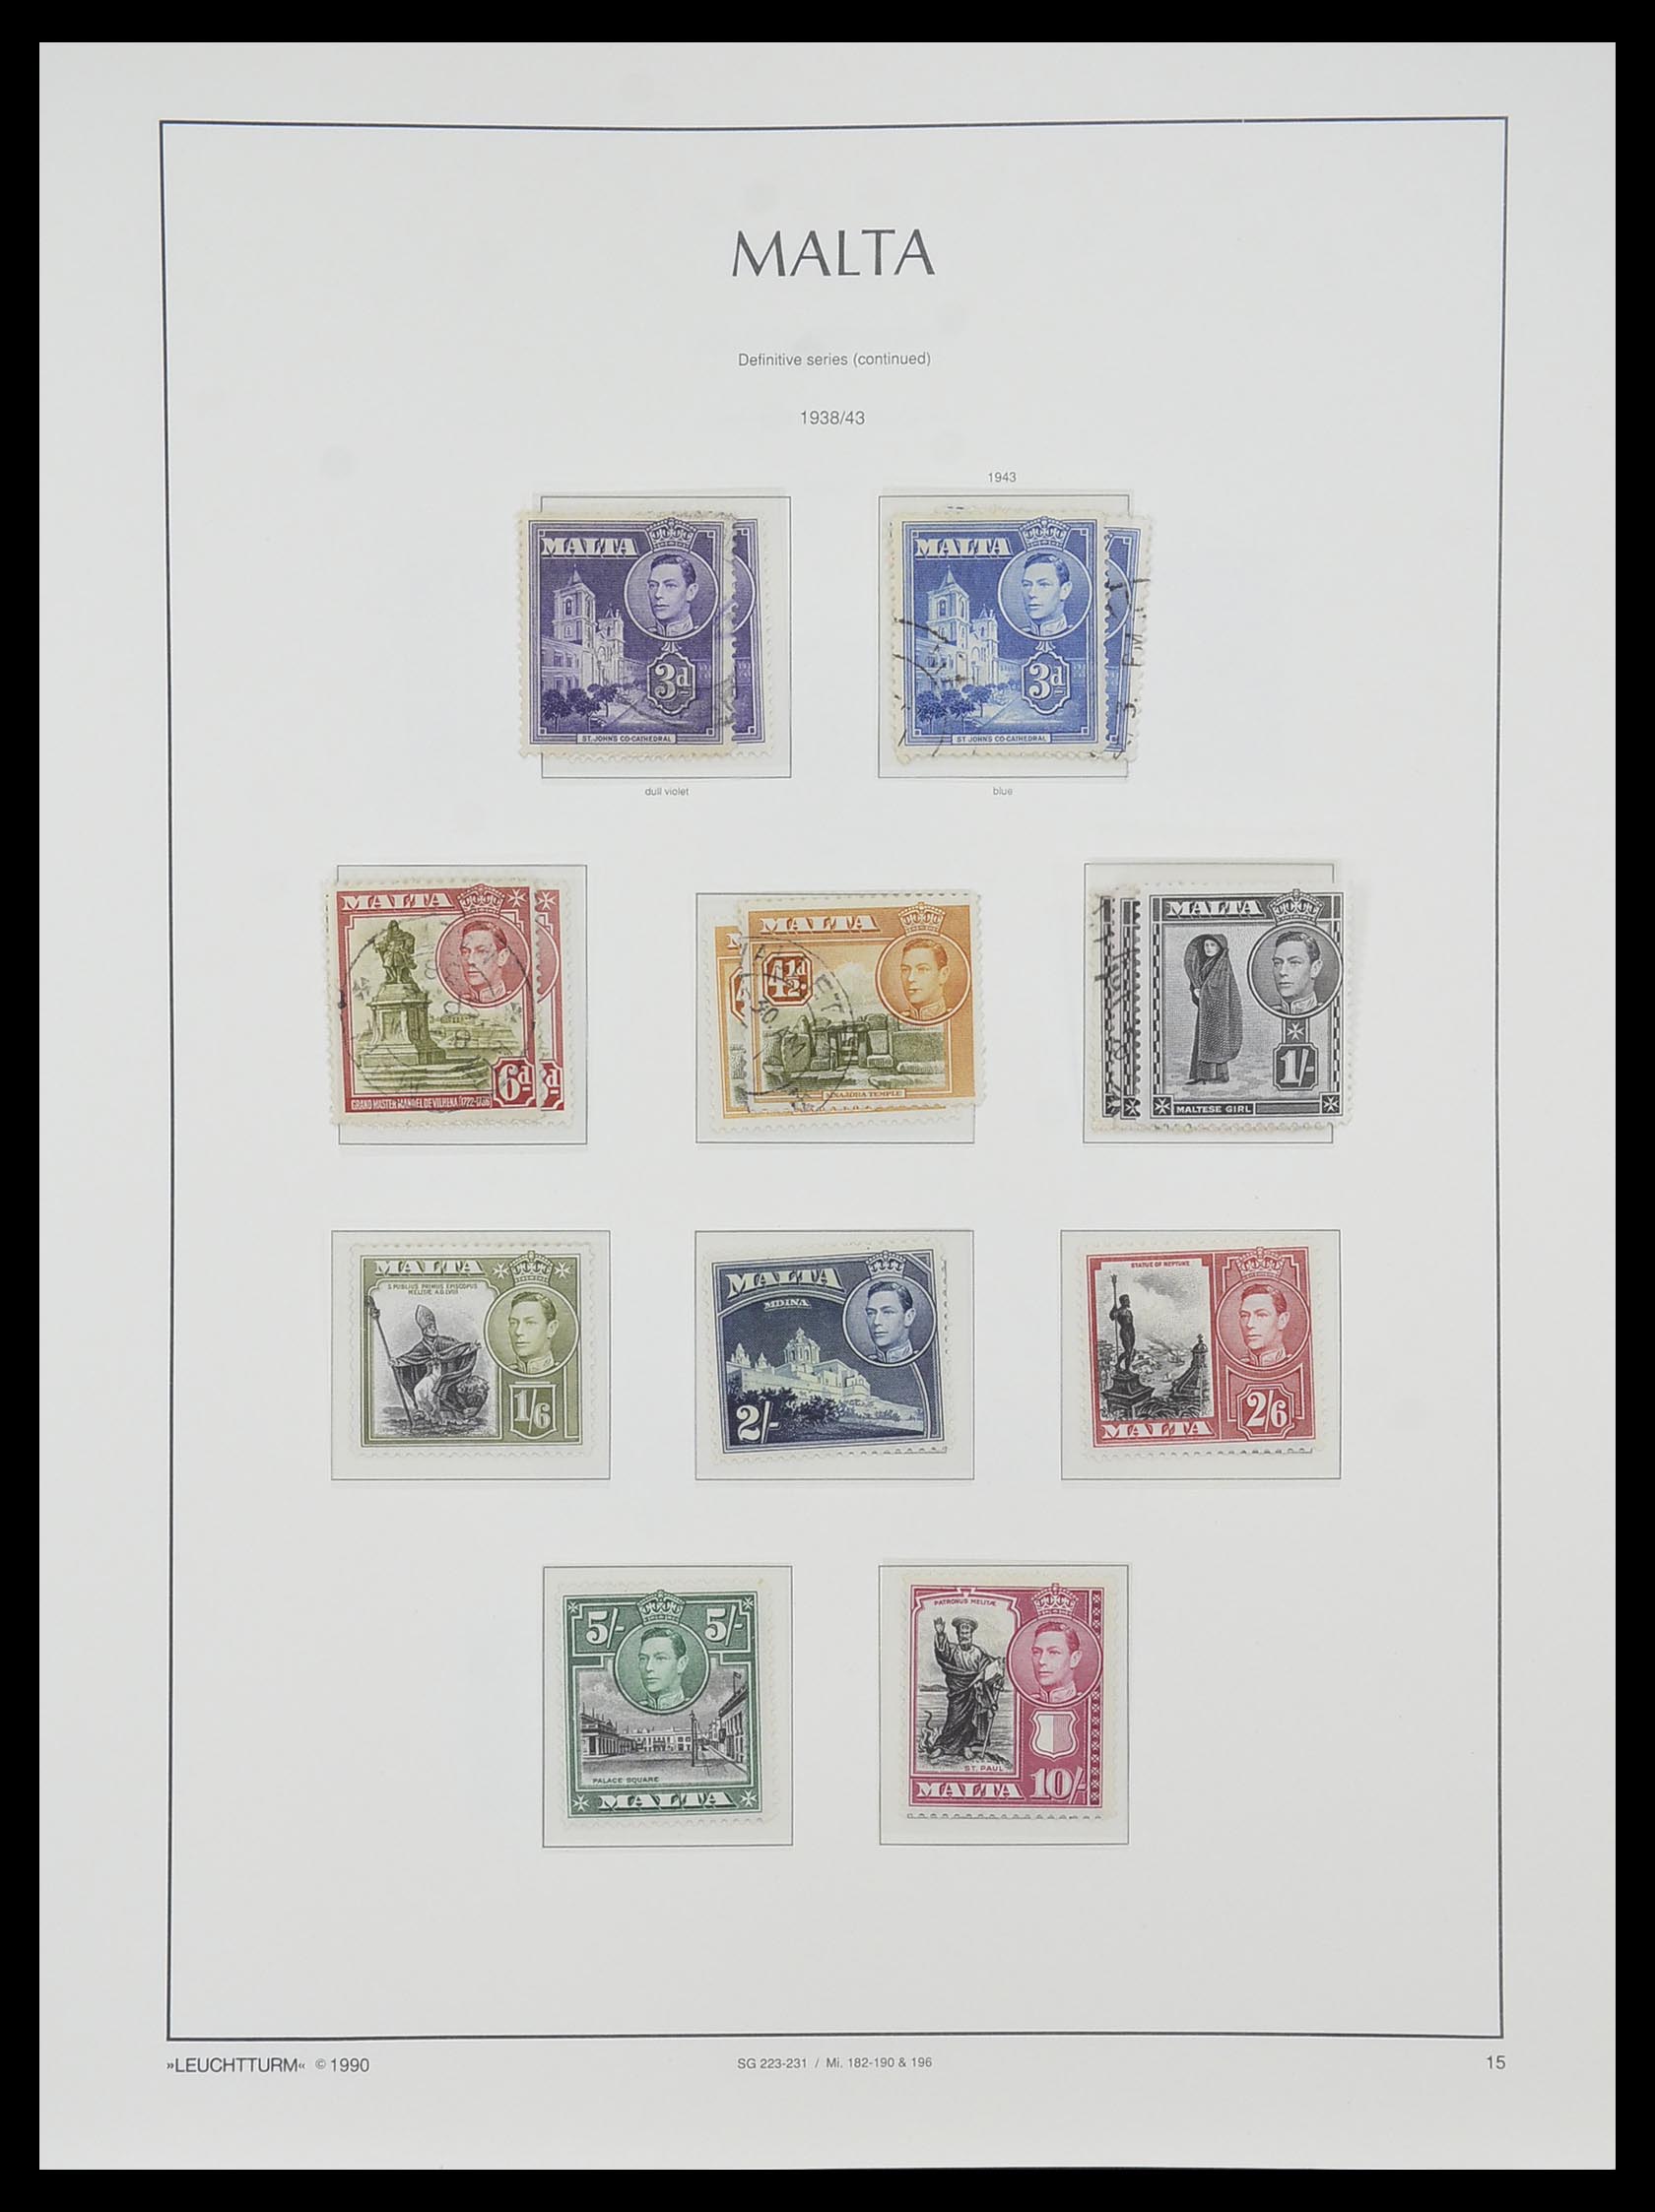 33968 016 - Stamp collection 33968 Malta 1861-2001.